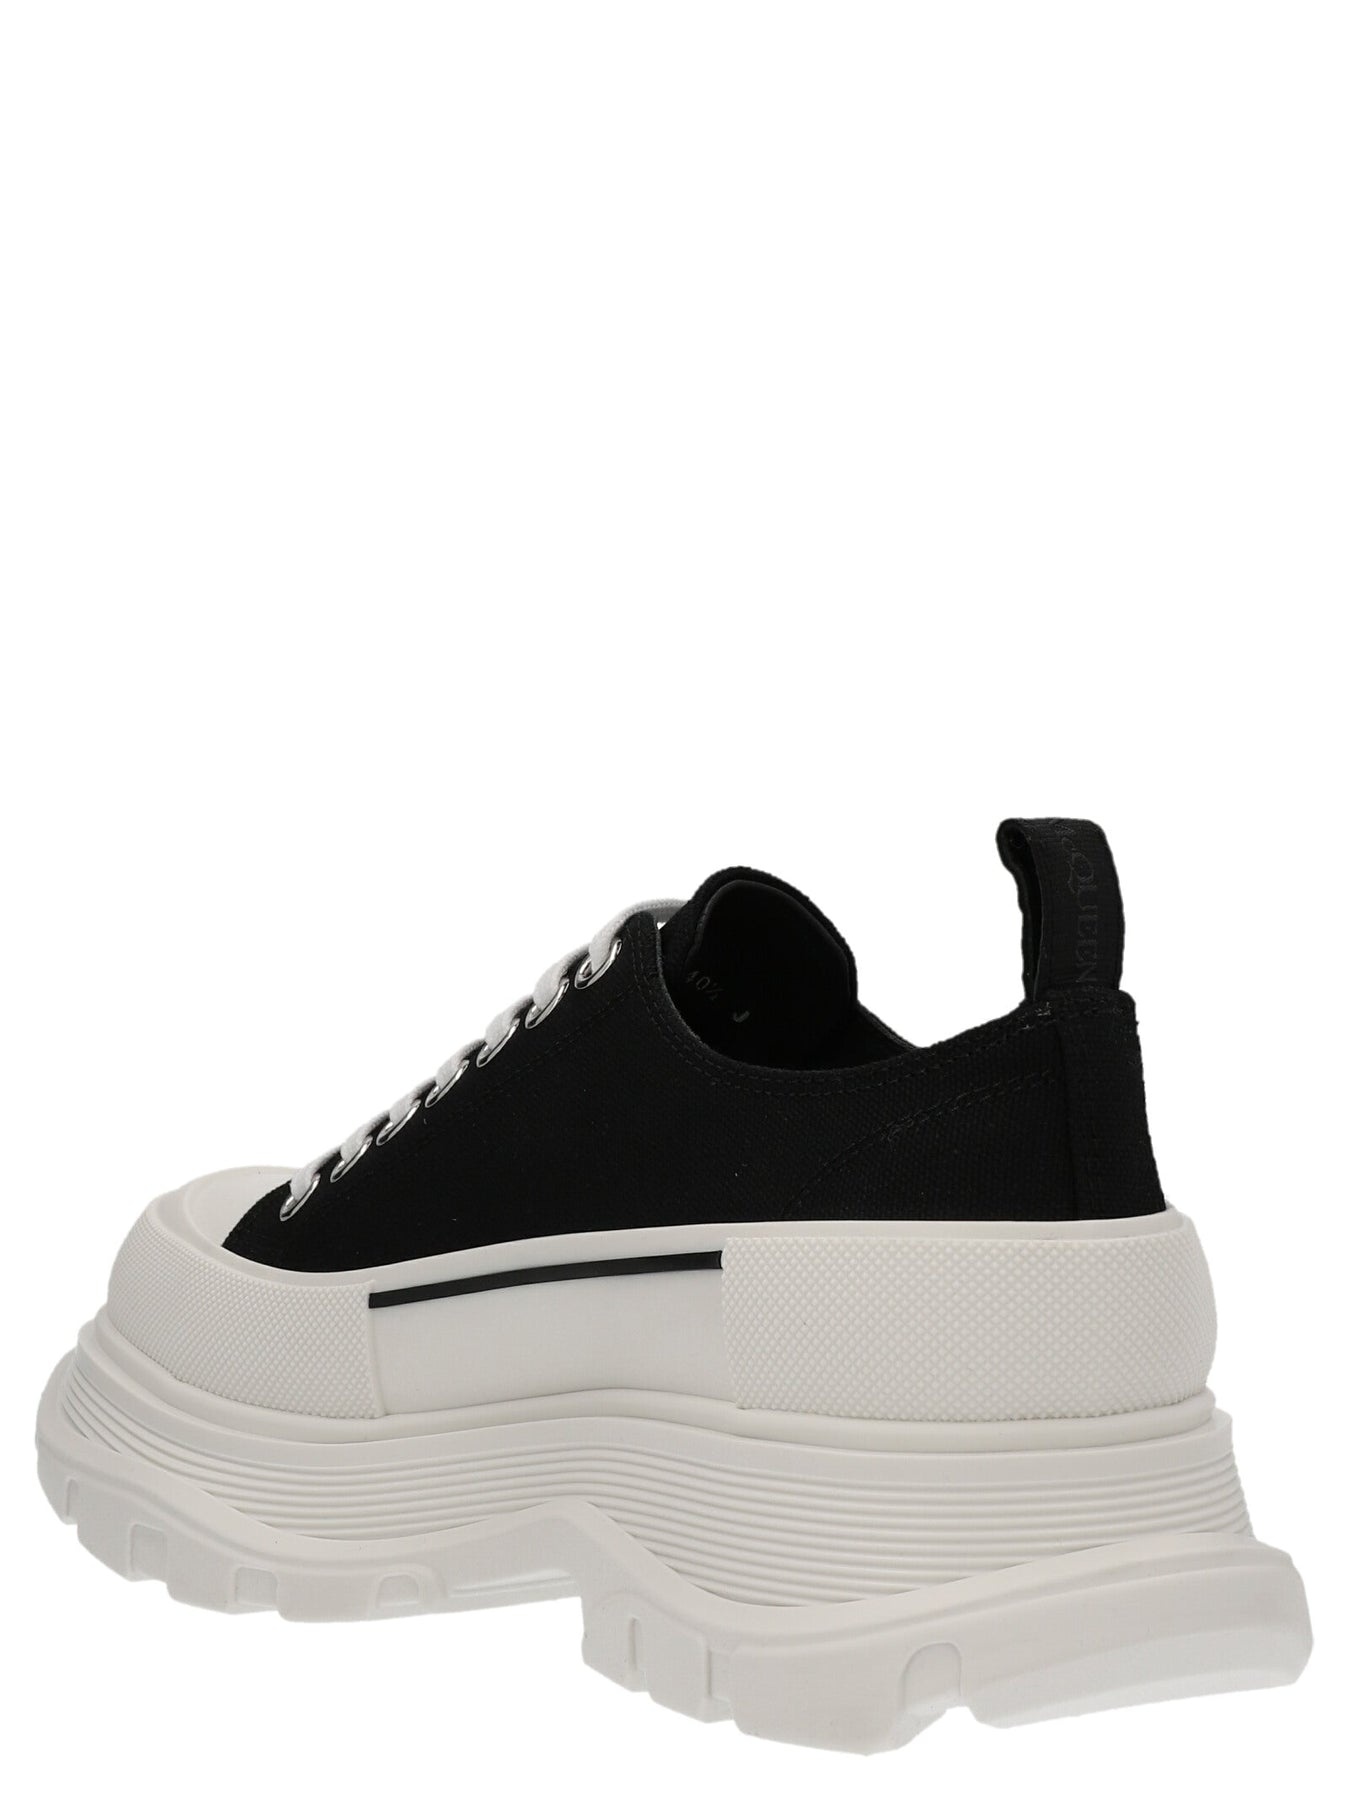 Oversize Sole Sneakers White/Black - 3